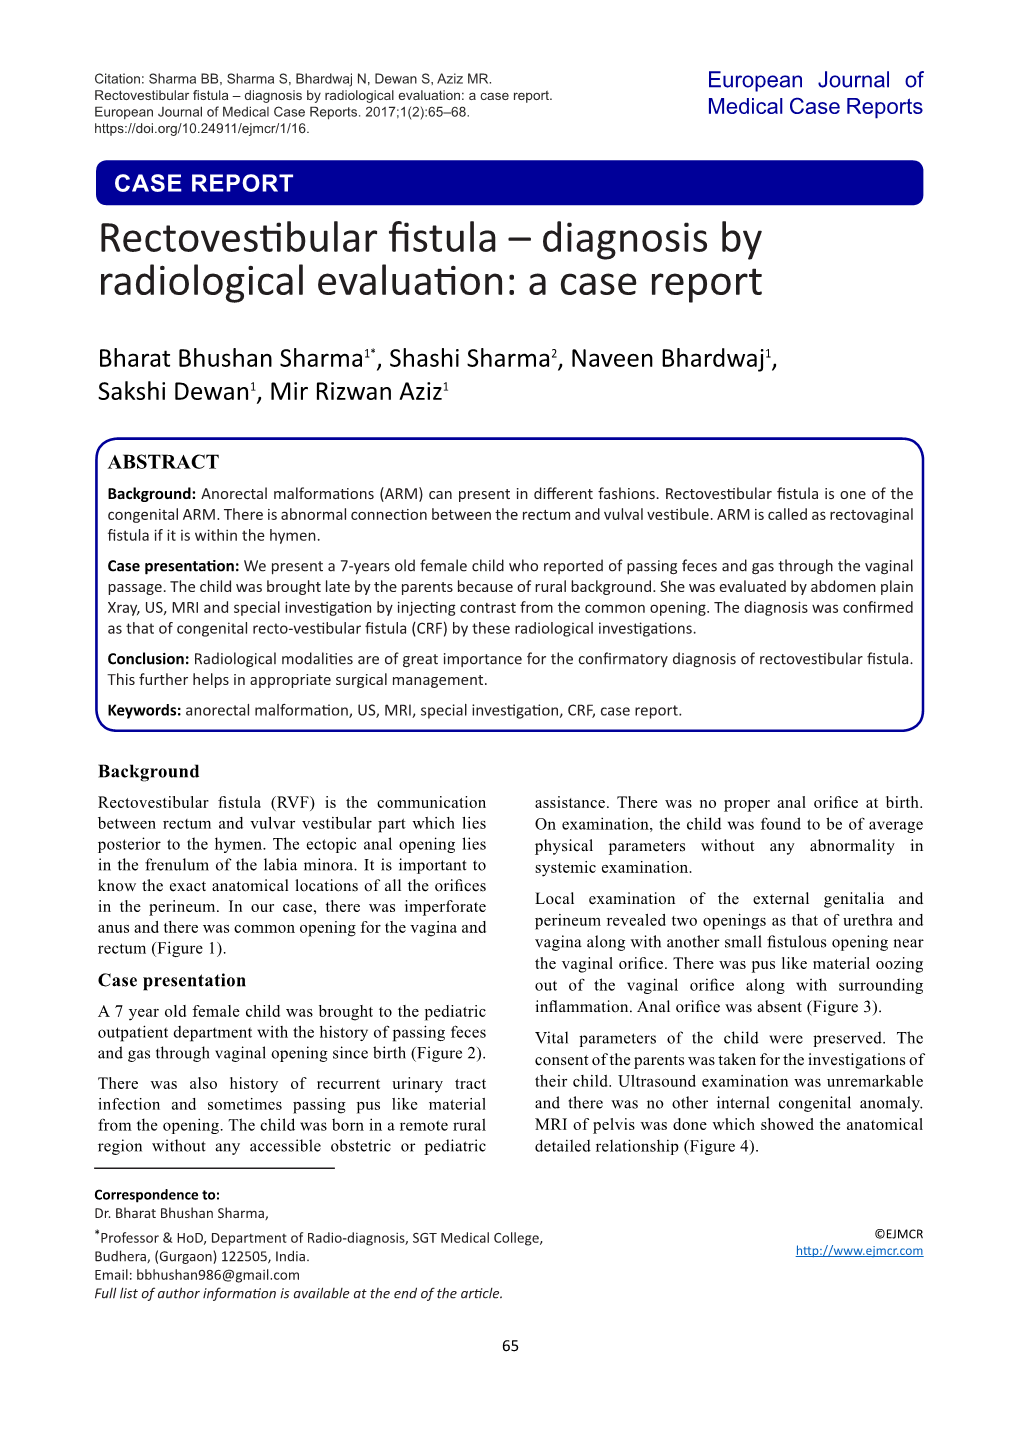 Rectovestibular Fistula – Diagnosis by Radiological Evaluation: a Case Report